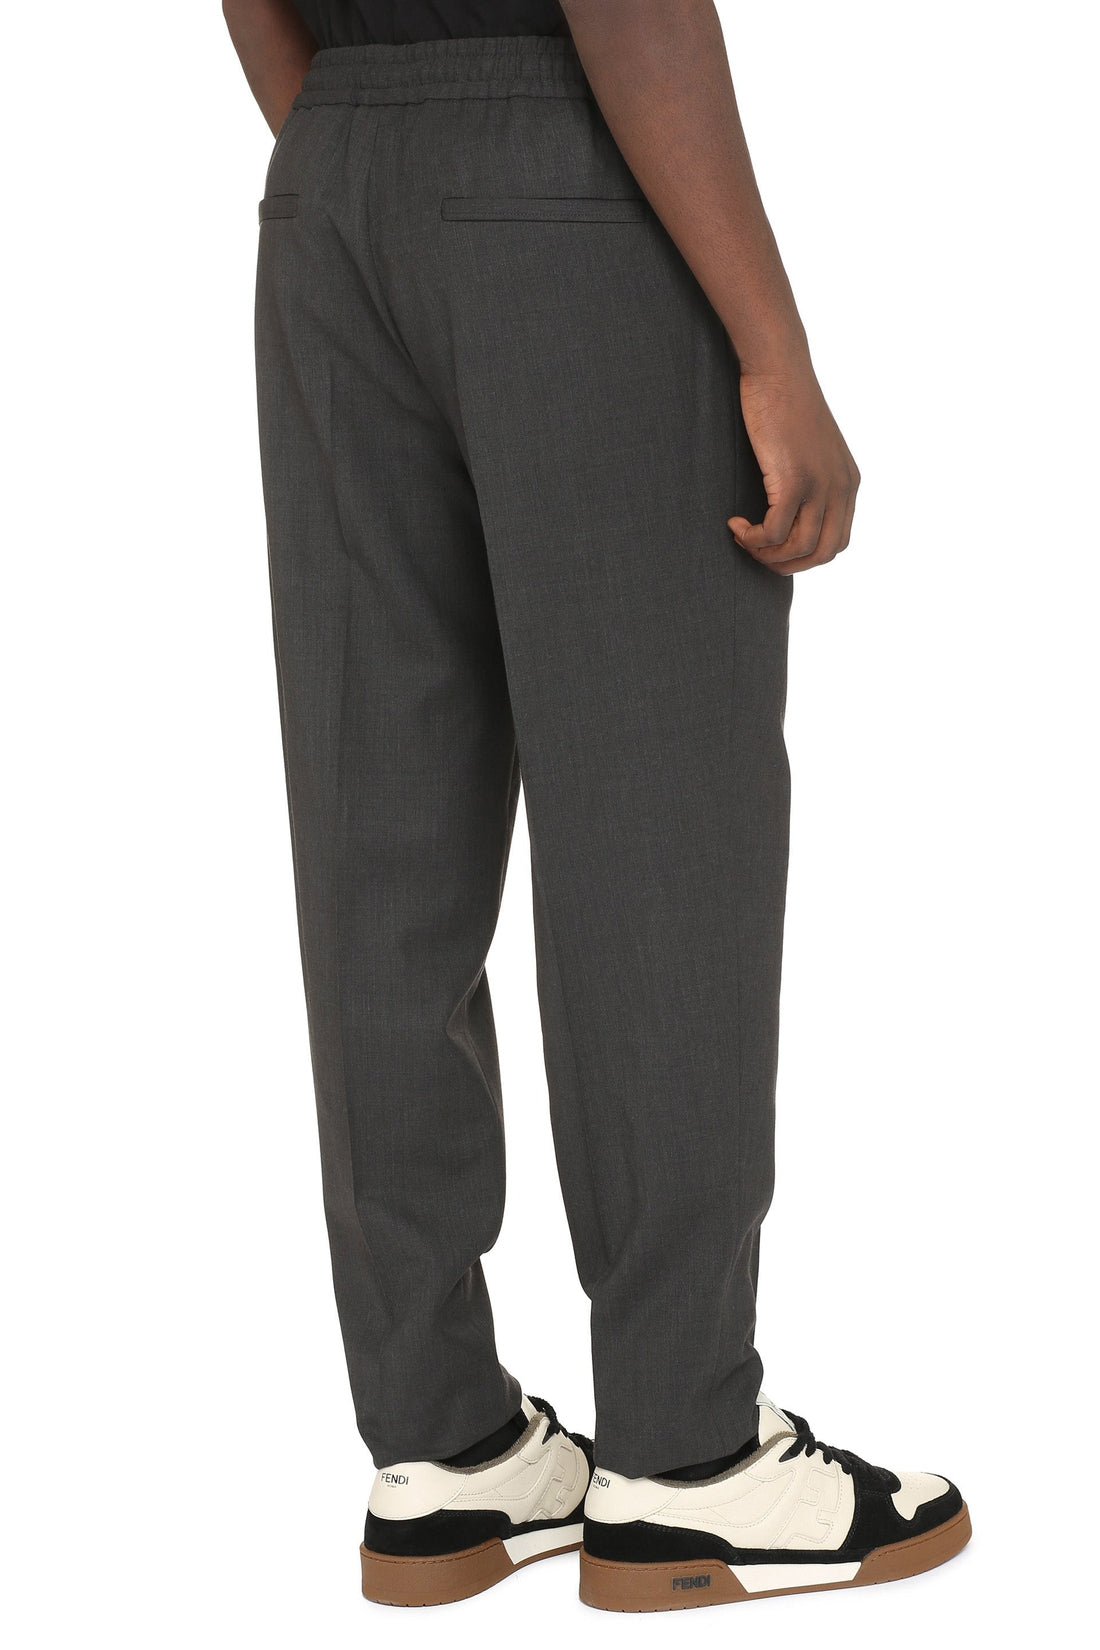 Zegna-OUTLET-SALE-Wool blend trousers-ARCHIVIST